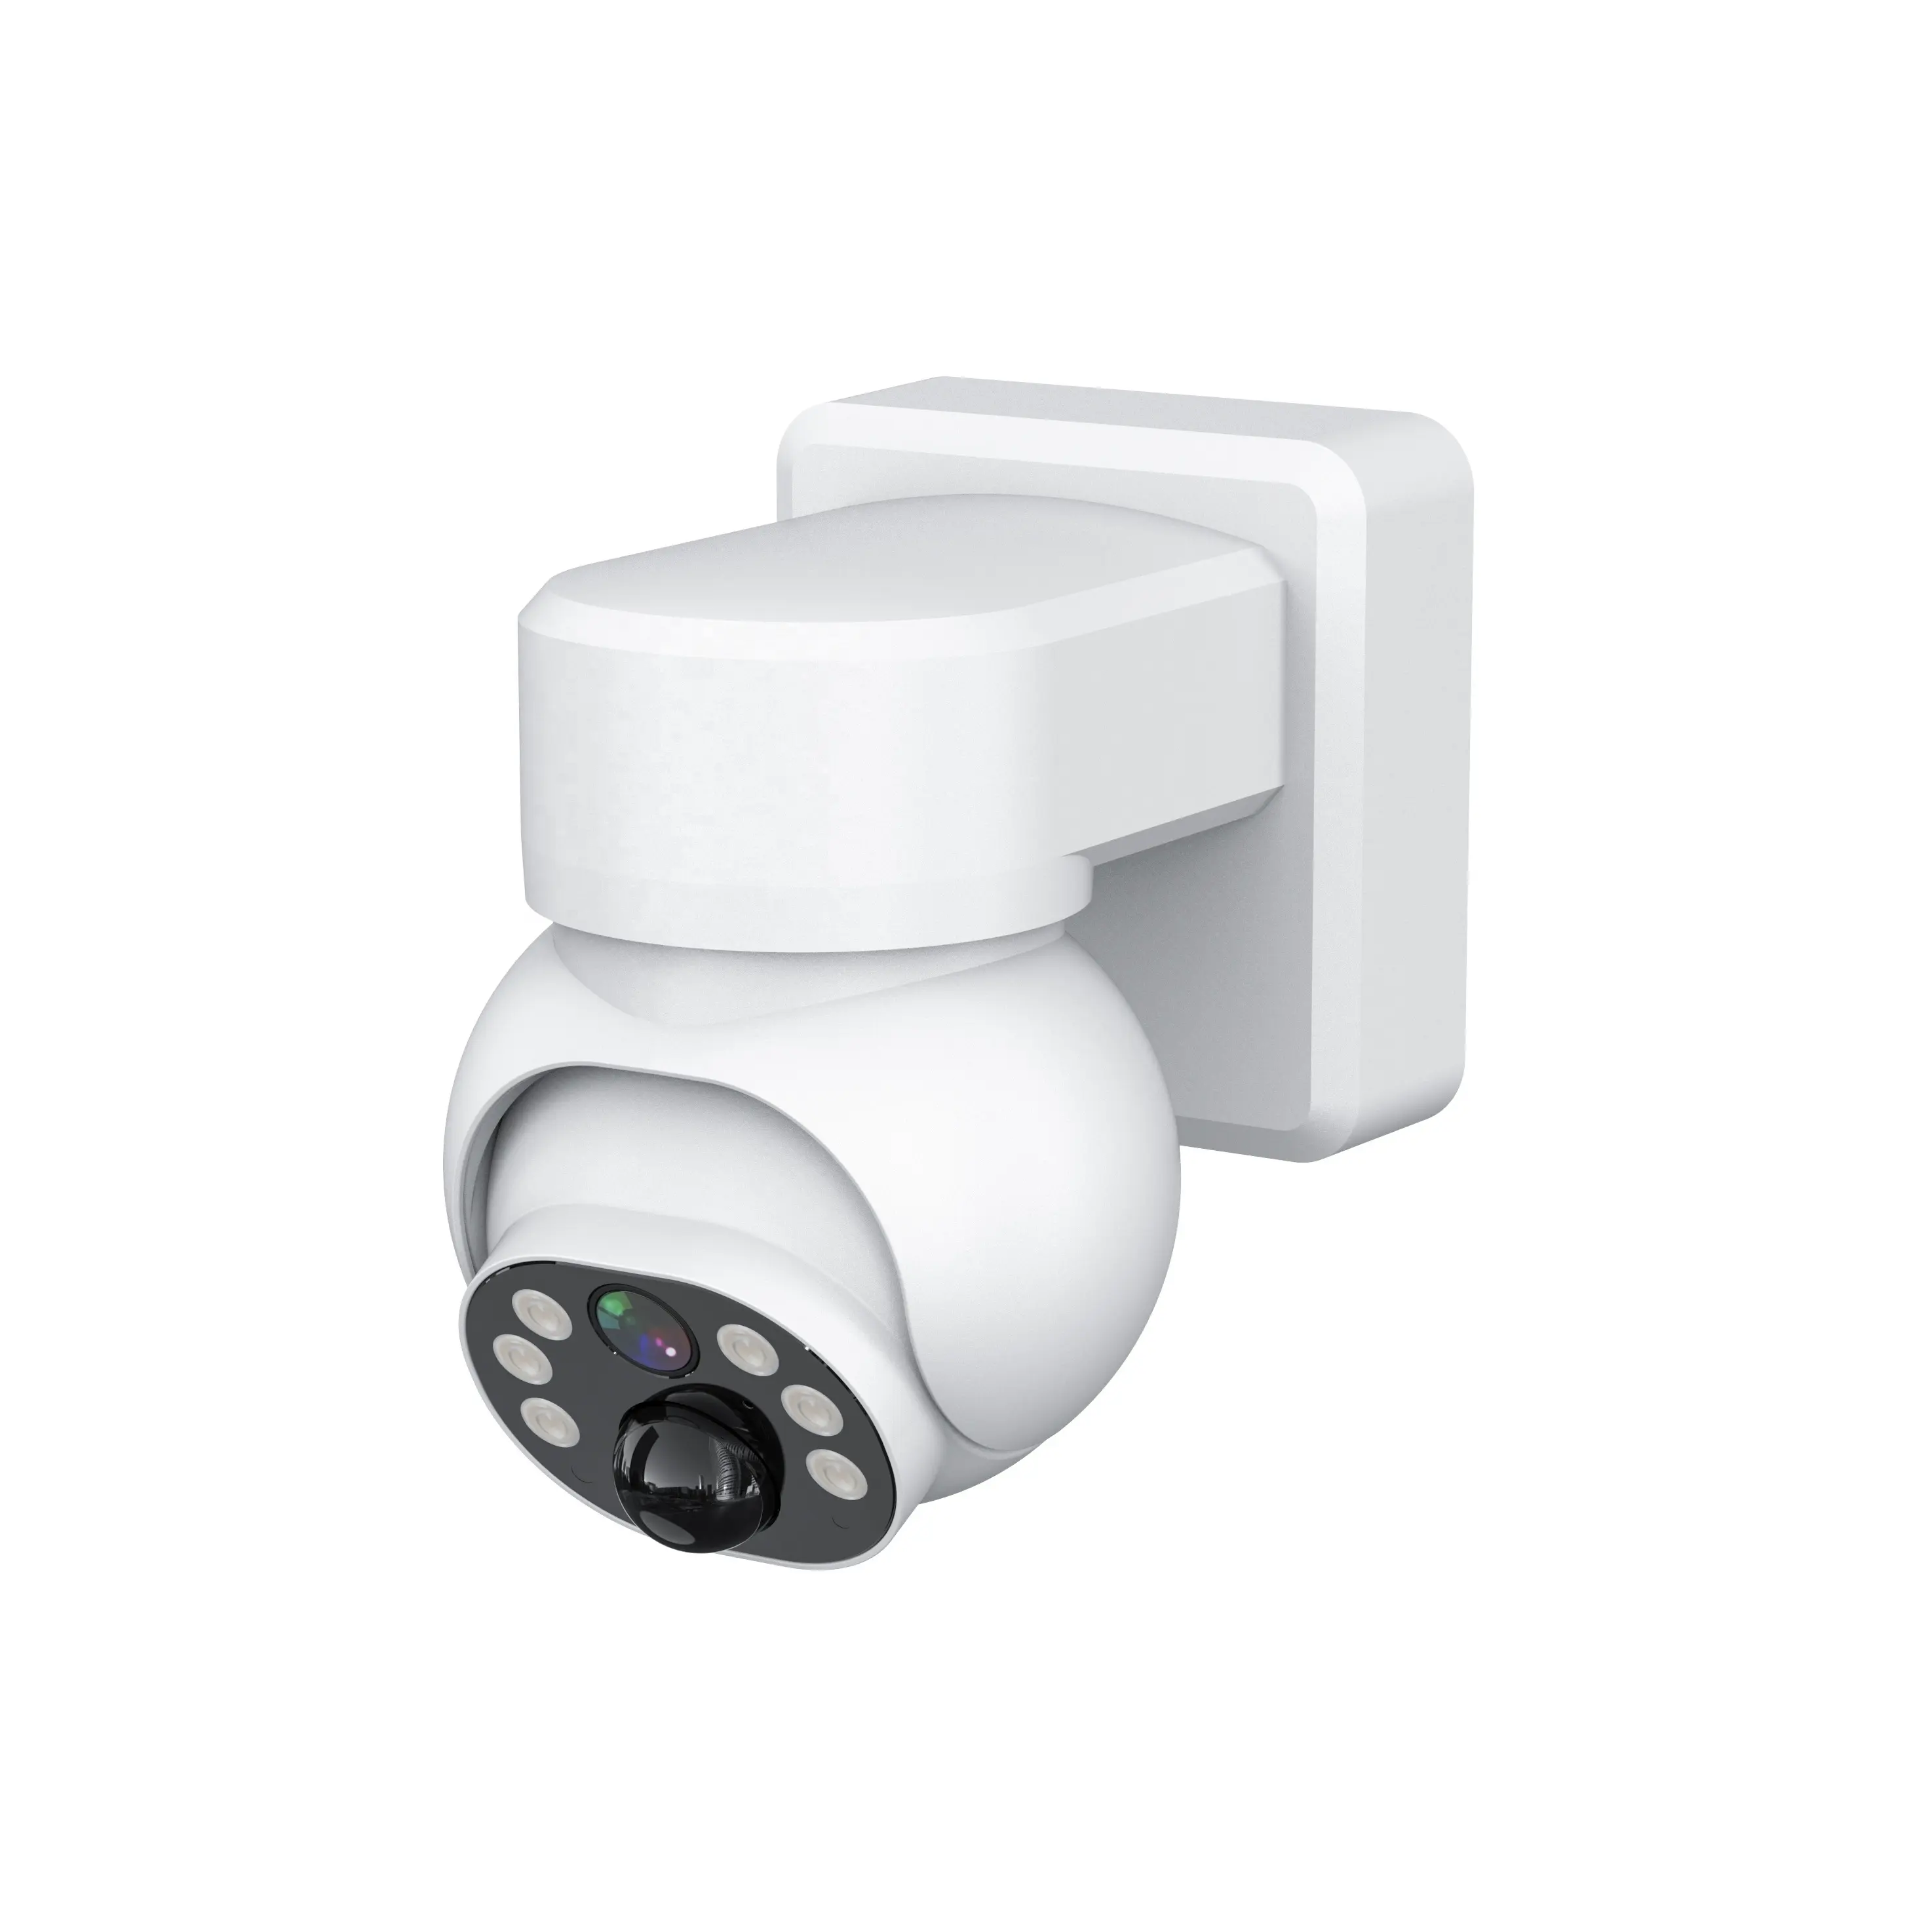 Blink Video Doorbell Two-way audio HD video motion and chime app alerts smart doorbell camera